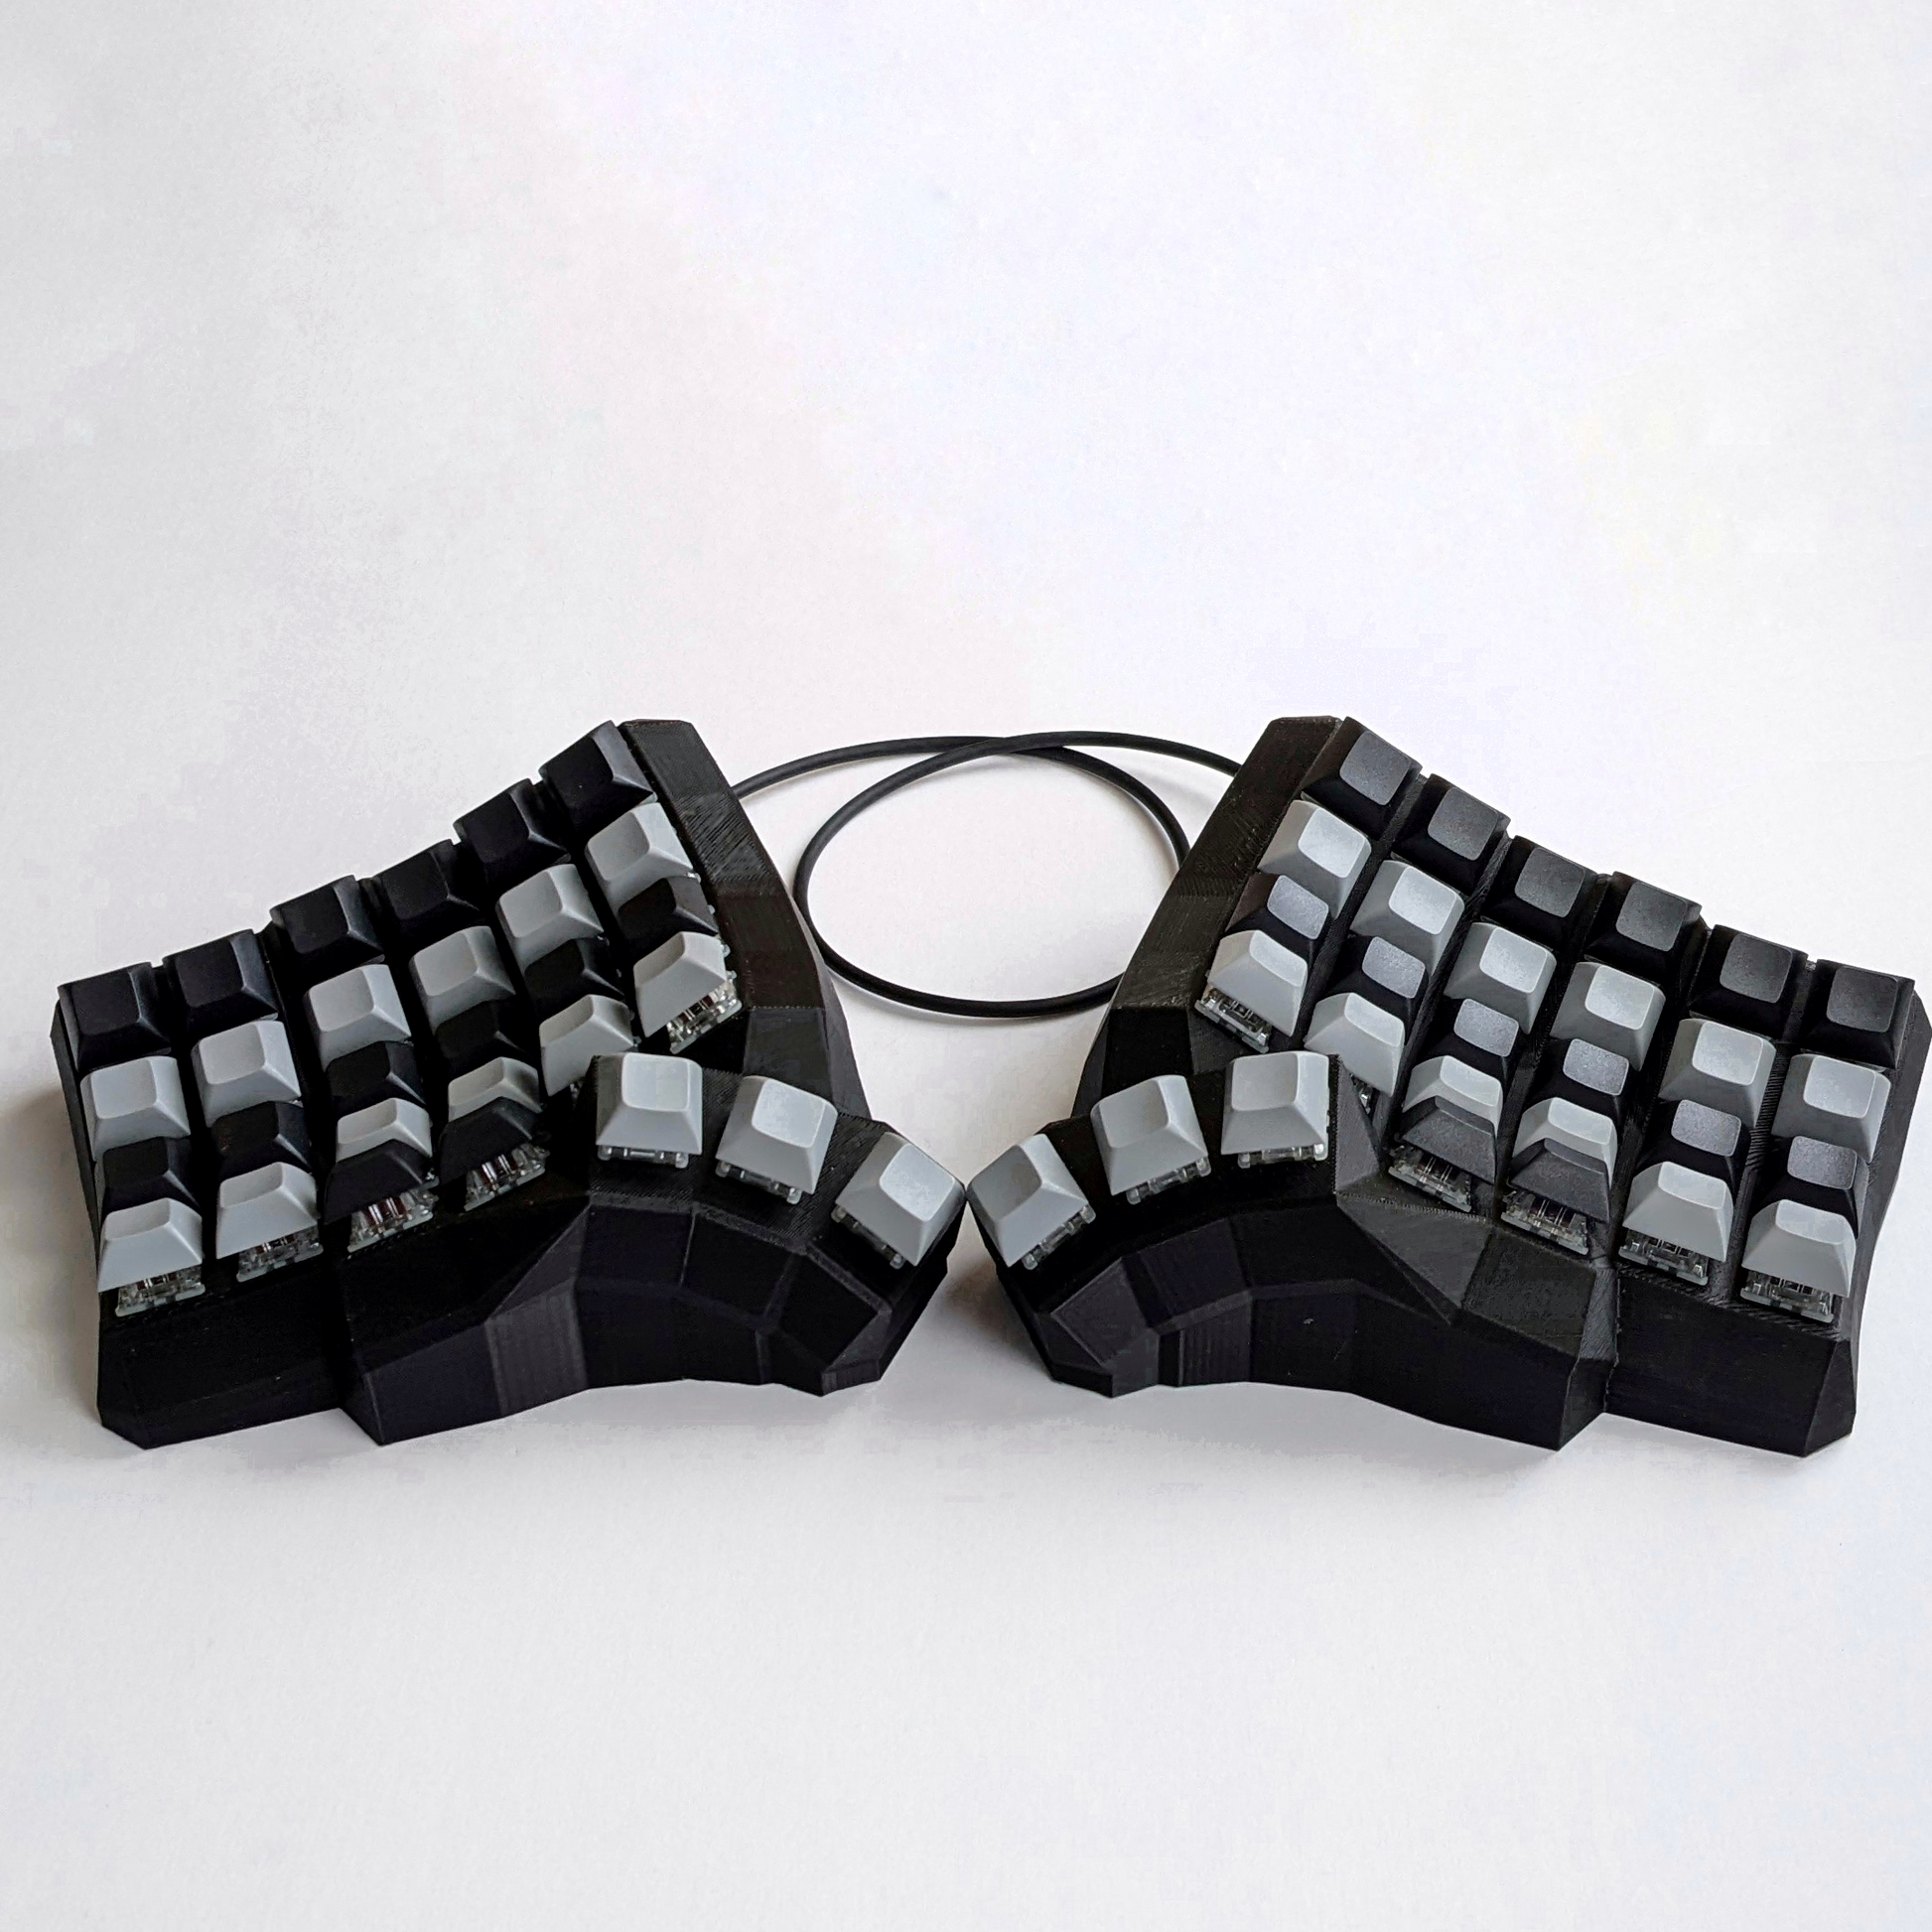 taikohub ergonomic split hotswappable mechanical keyboard size small in black 2022